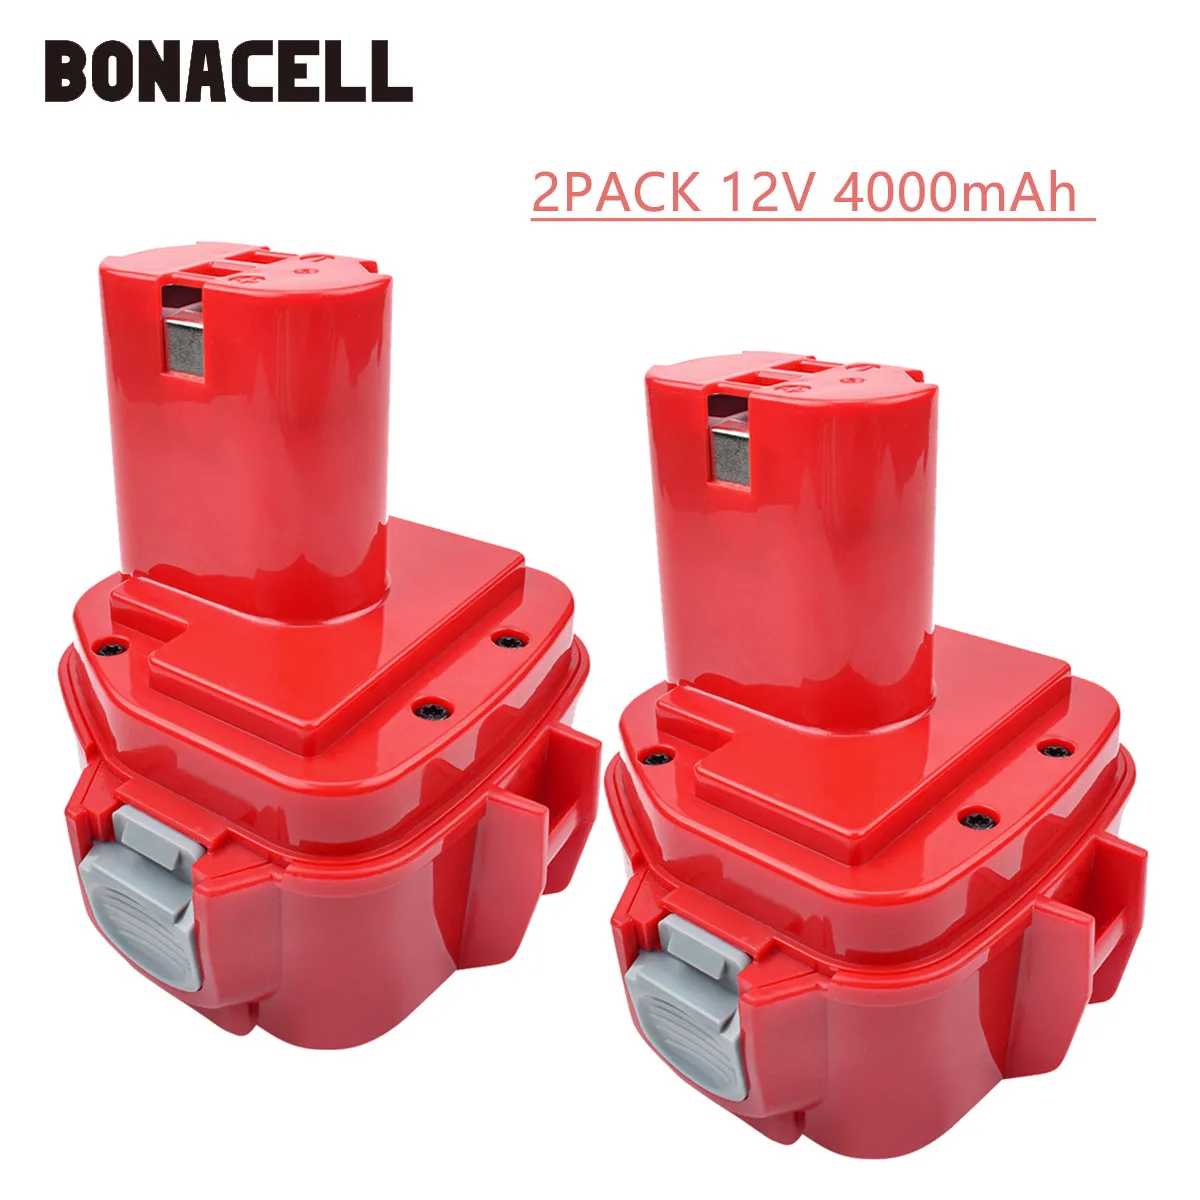 Bonacell 12v 4000 мА/ч, сменный никель-металлогидридный аккумулятор Батарея для Makita 1220 PA12 1222 1233S 1233SA 1233SB 1235 1235A 1235B 192598-2 L30 - Цвет: 2PACK  4.0Ah